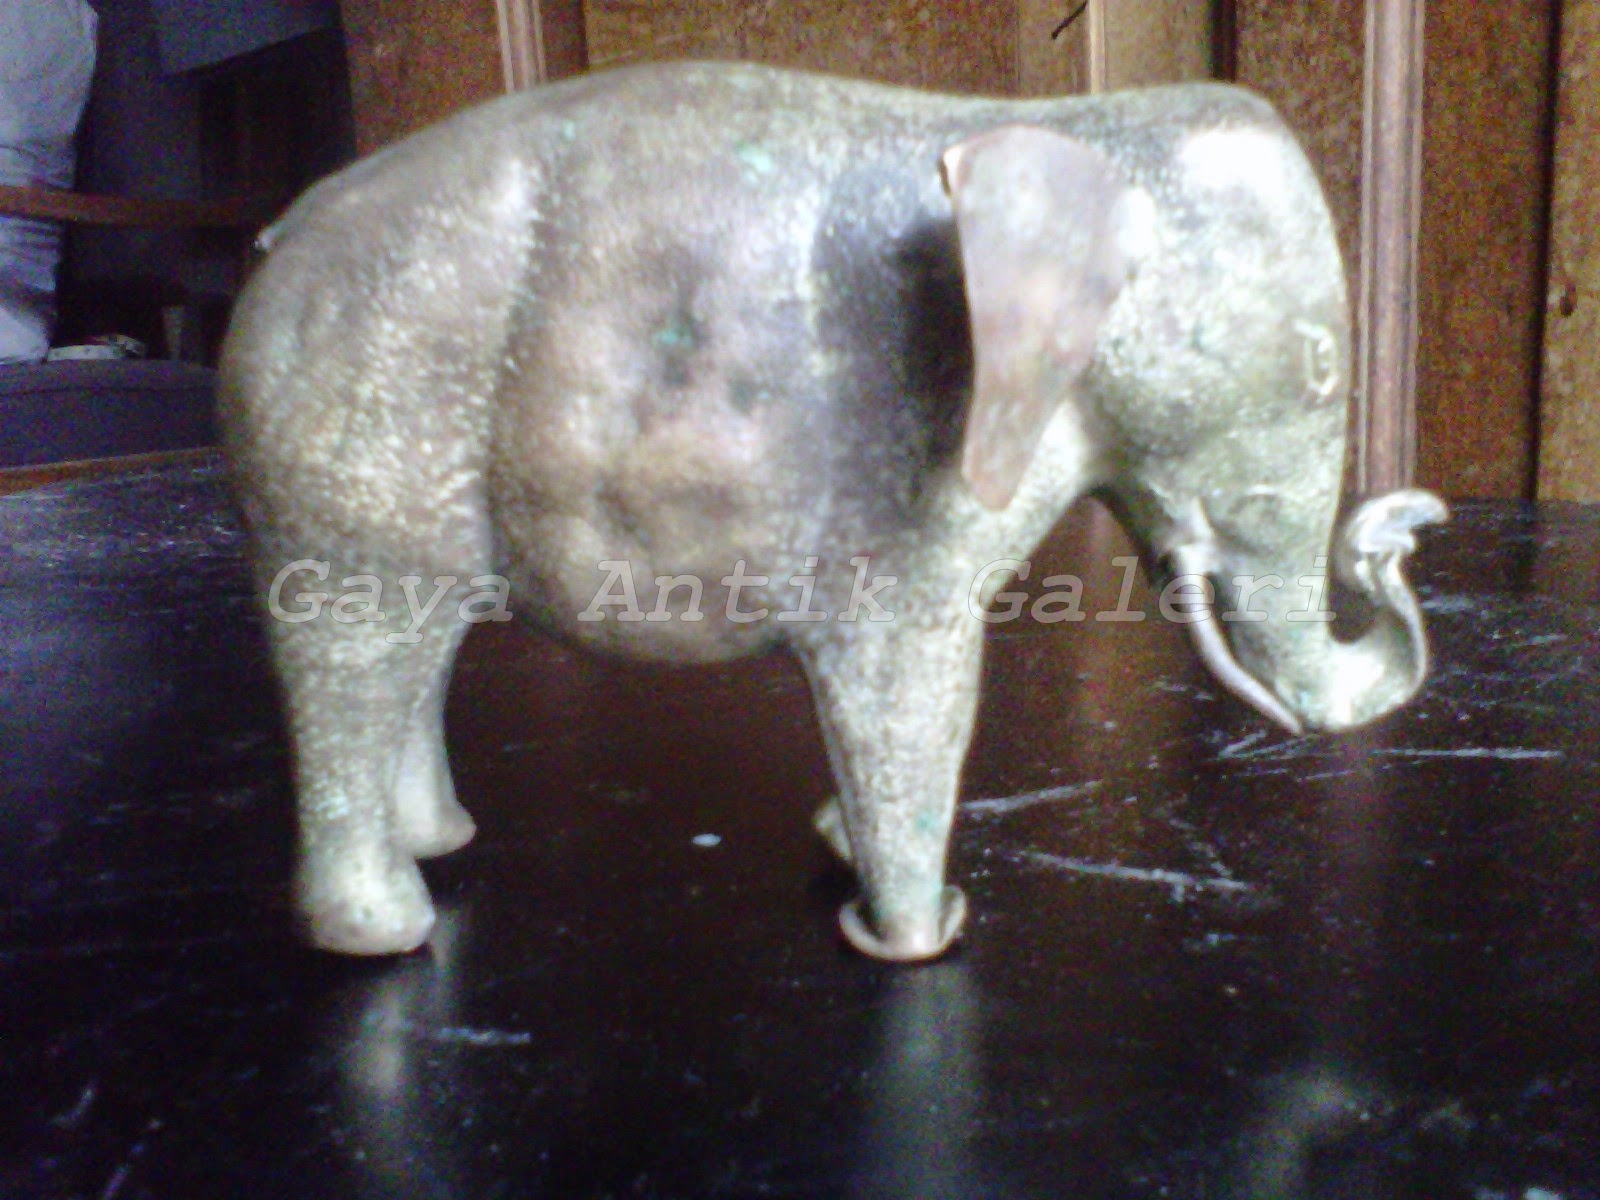 Gaya Antik Galeri Gaya Antique Gallery Patung Gajah Antik Bahan